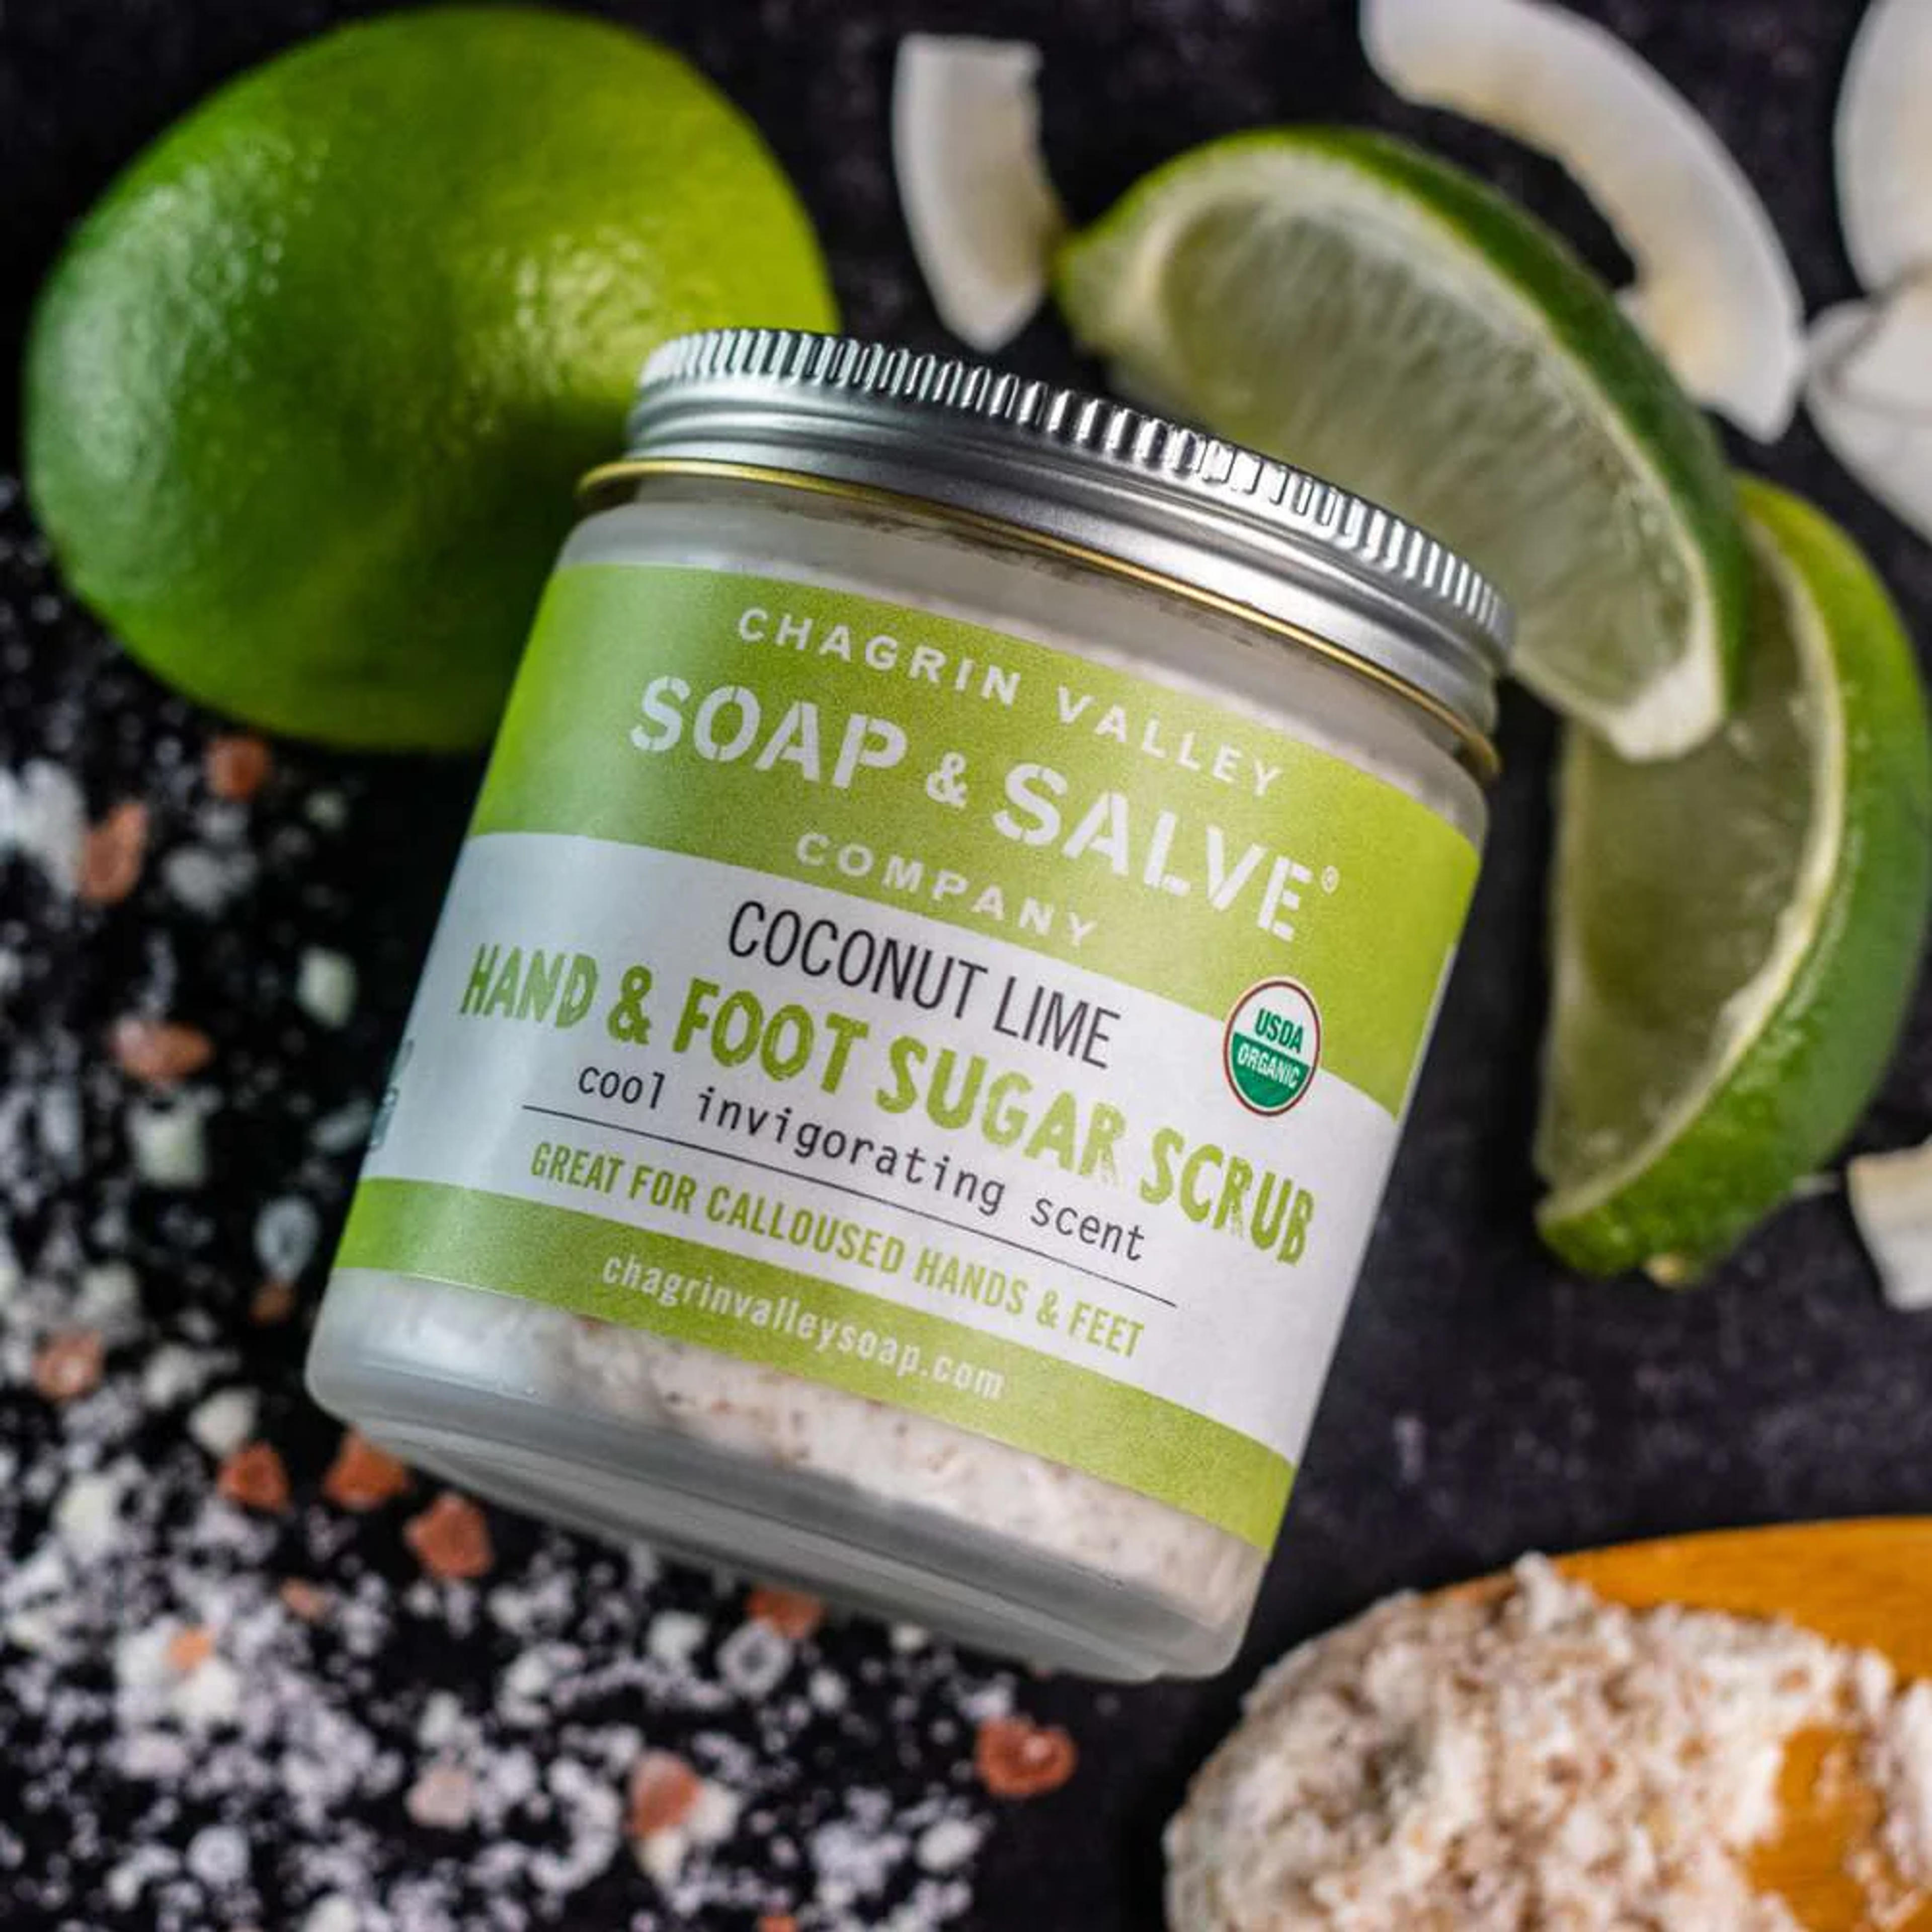 Sugar Scrub: Coconut Lime Hand & Foot Polish – Chagrin Valley Soap & Salve